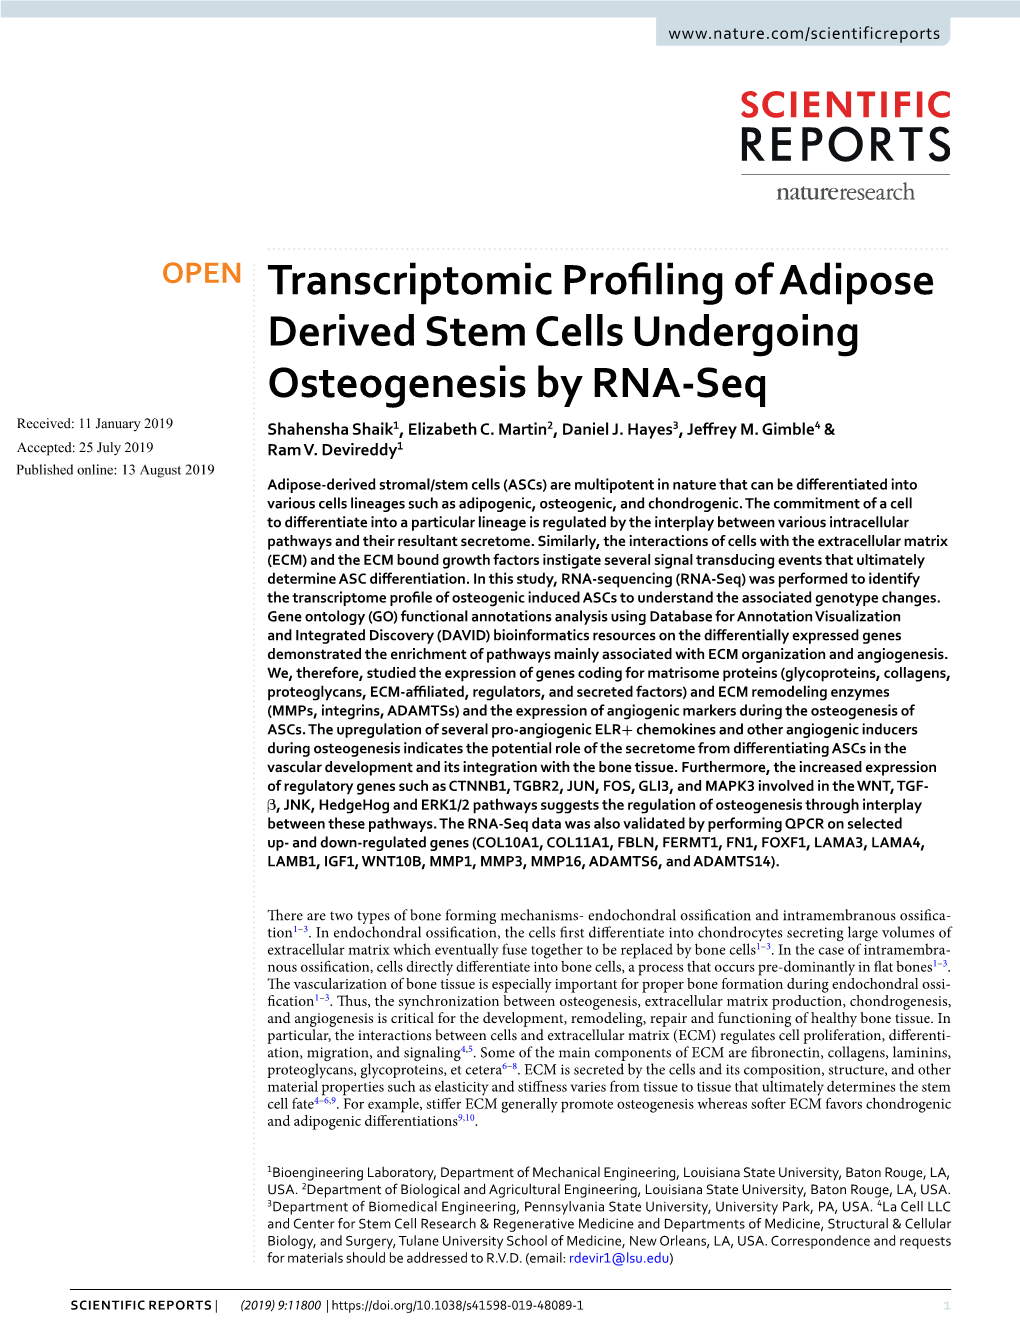 Transcriptomic Profiling of Adipose Derived Stem Cells Undergoing